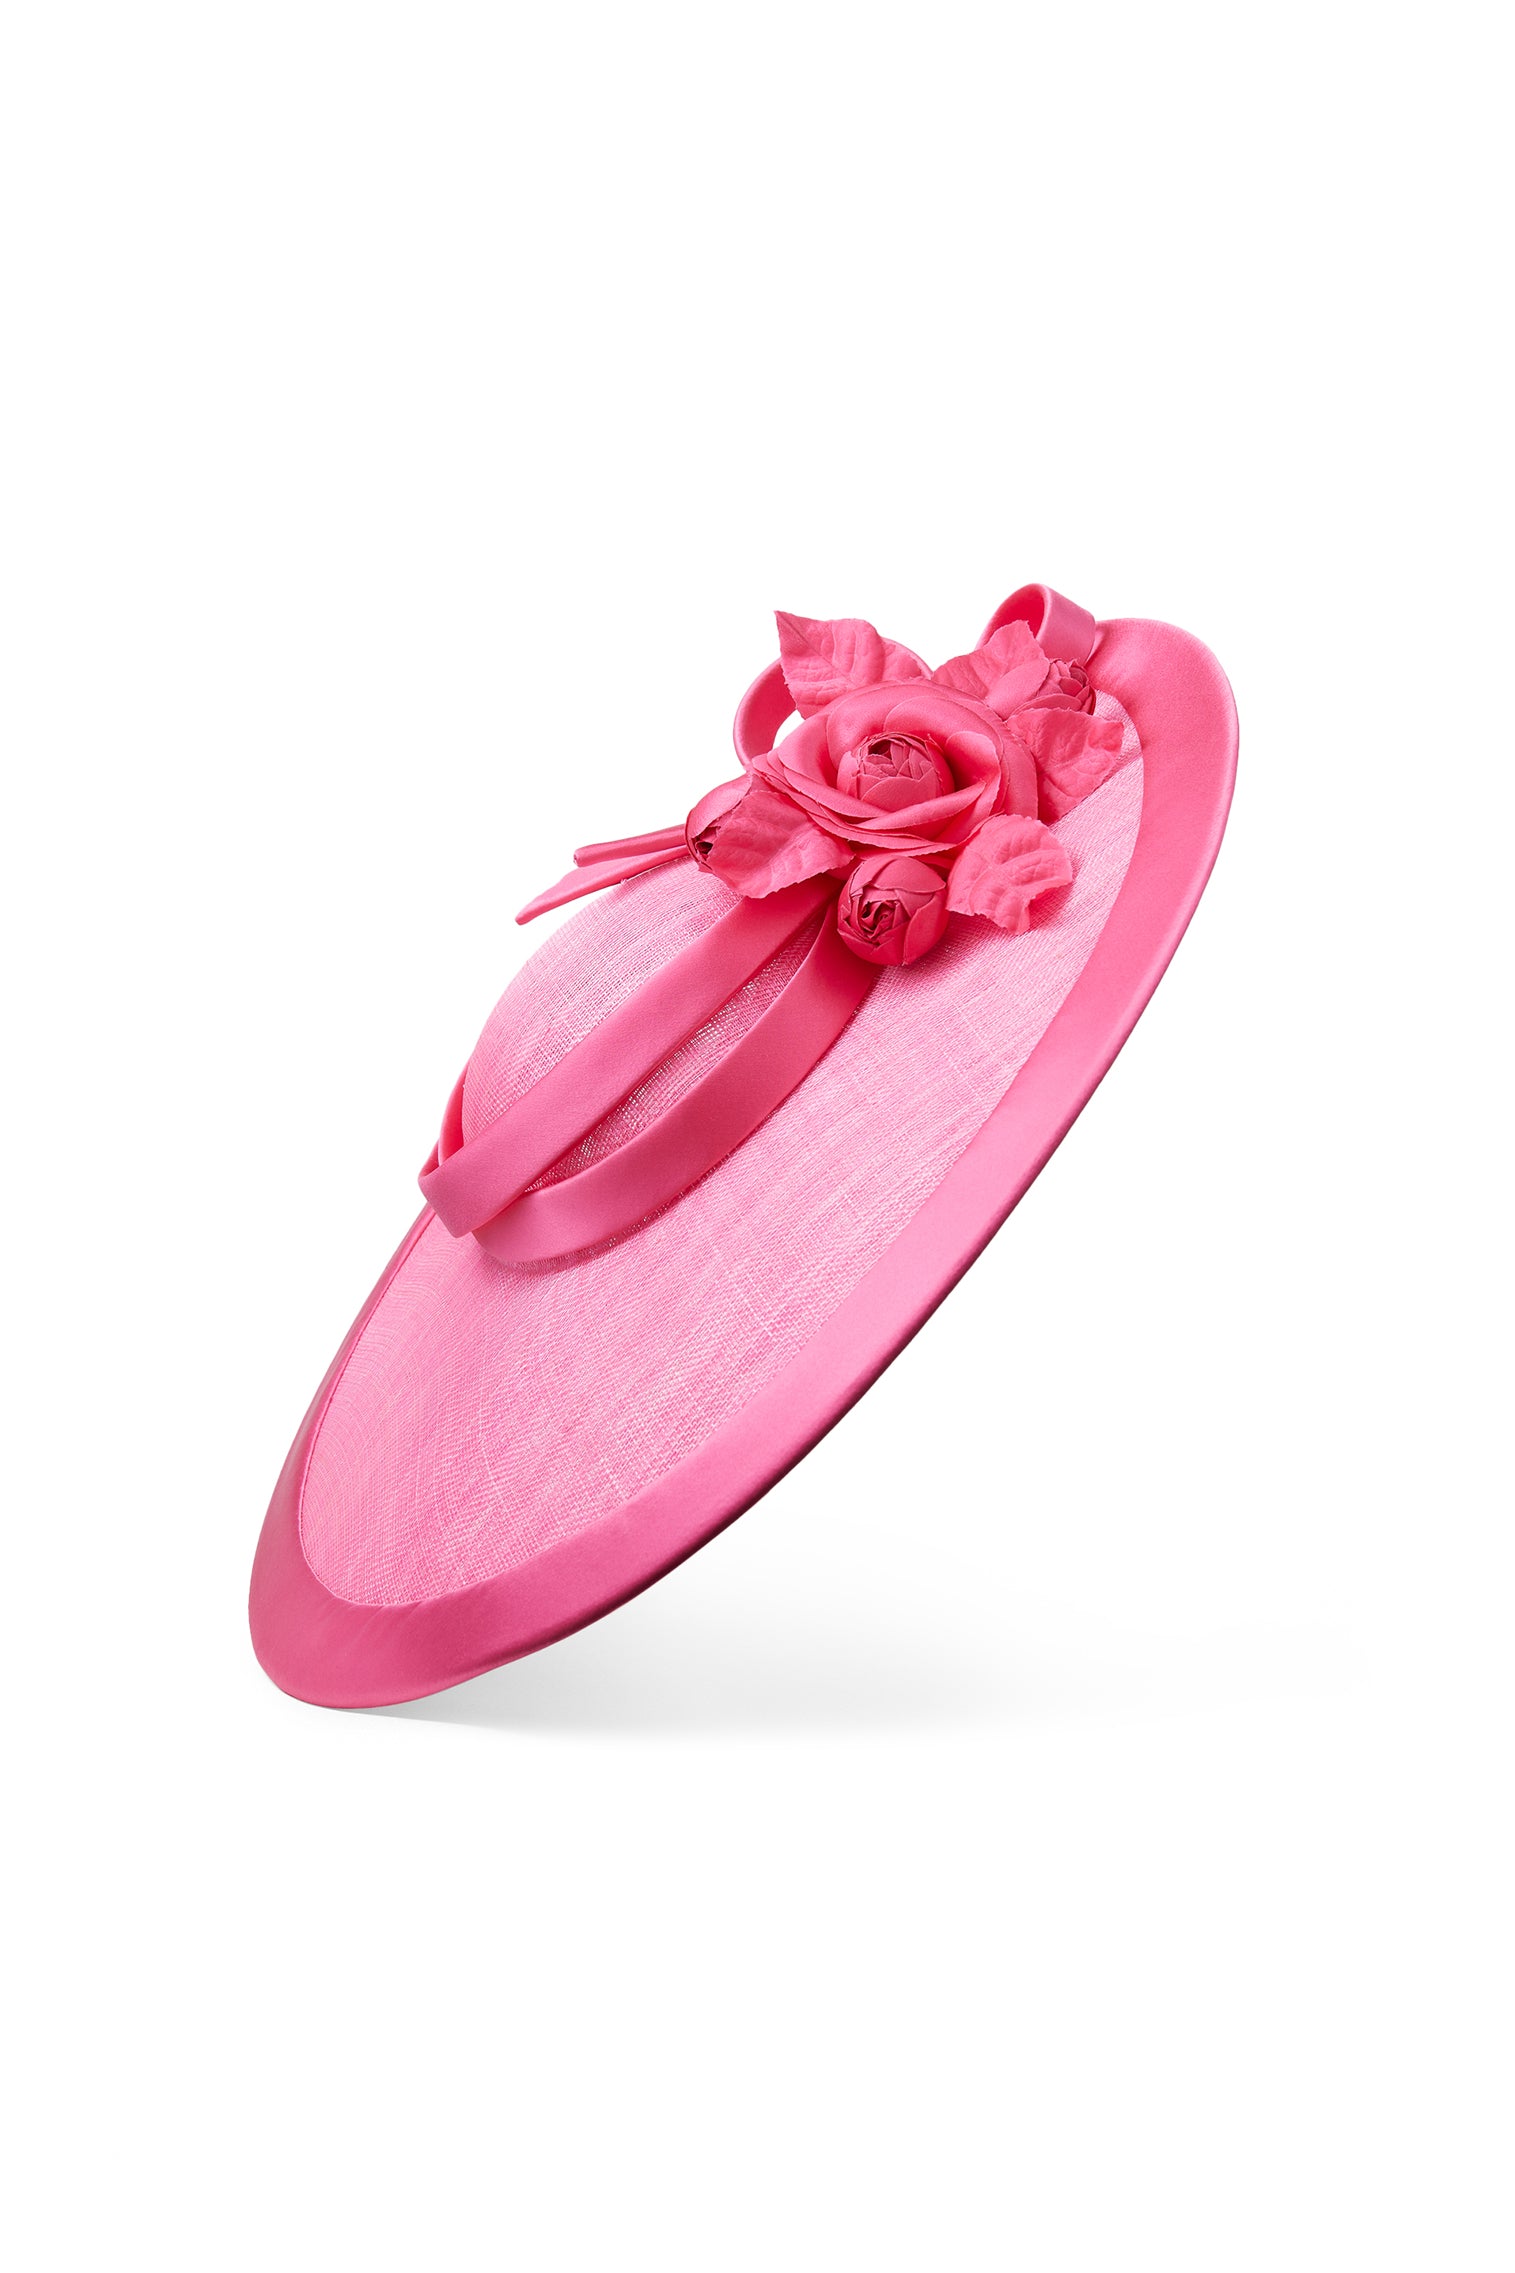 Jasmine Bright Pink Slice Hat - New Season Women's Hats - Lock & Co. Hatters London UK